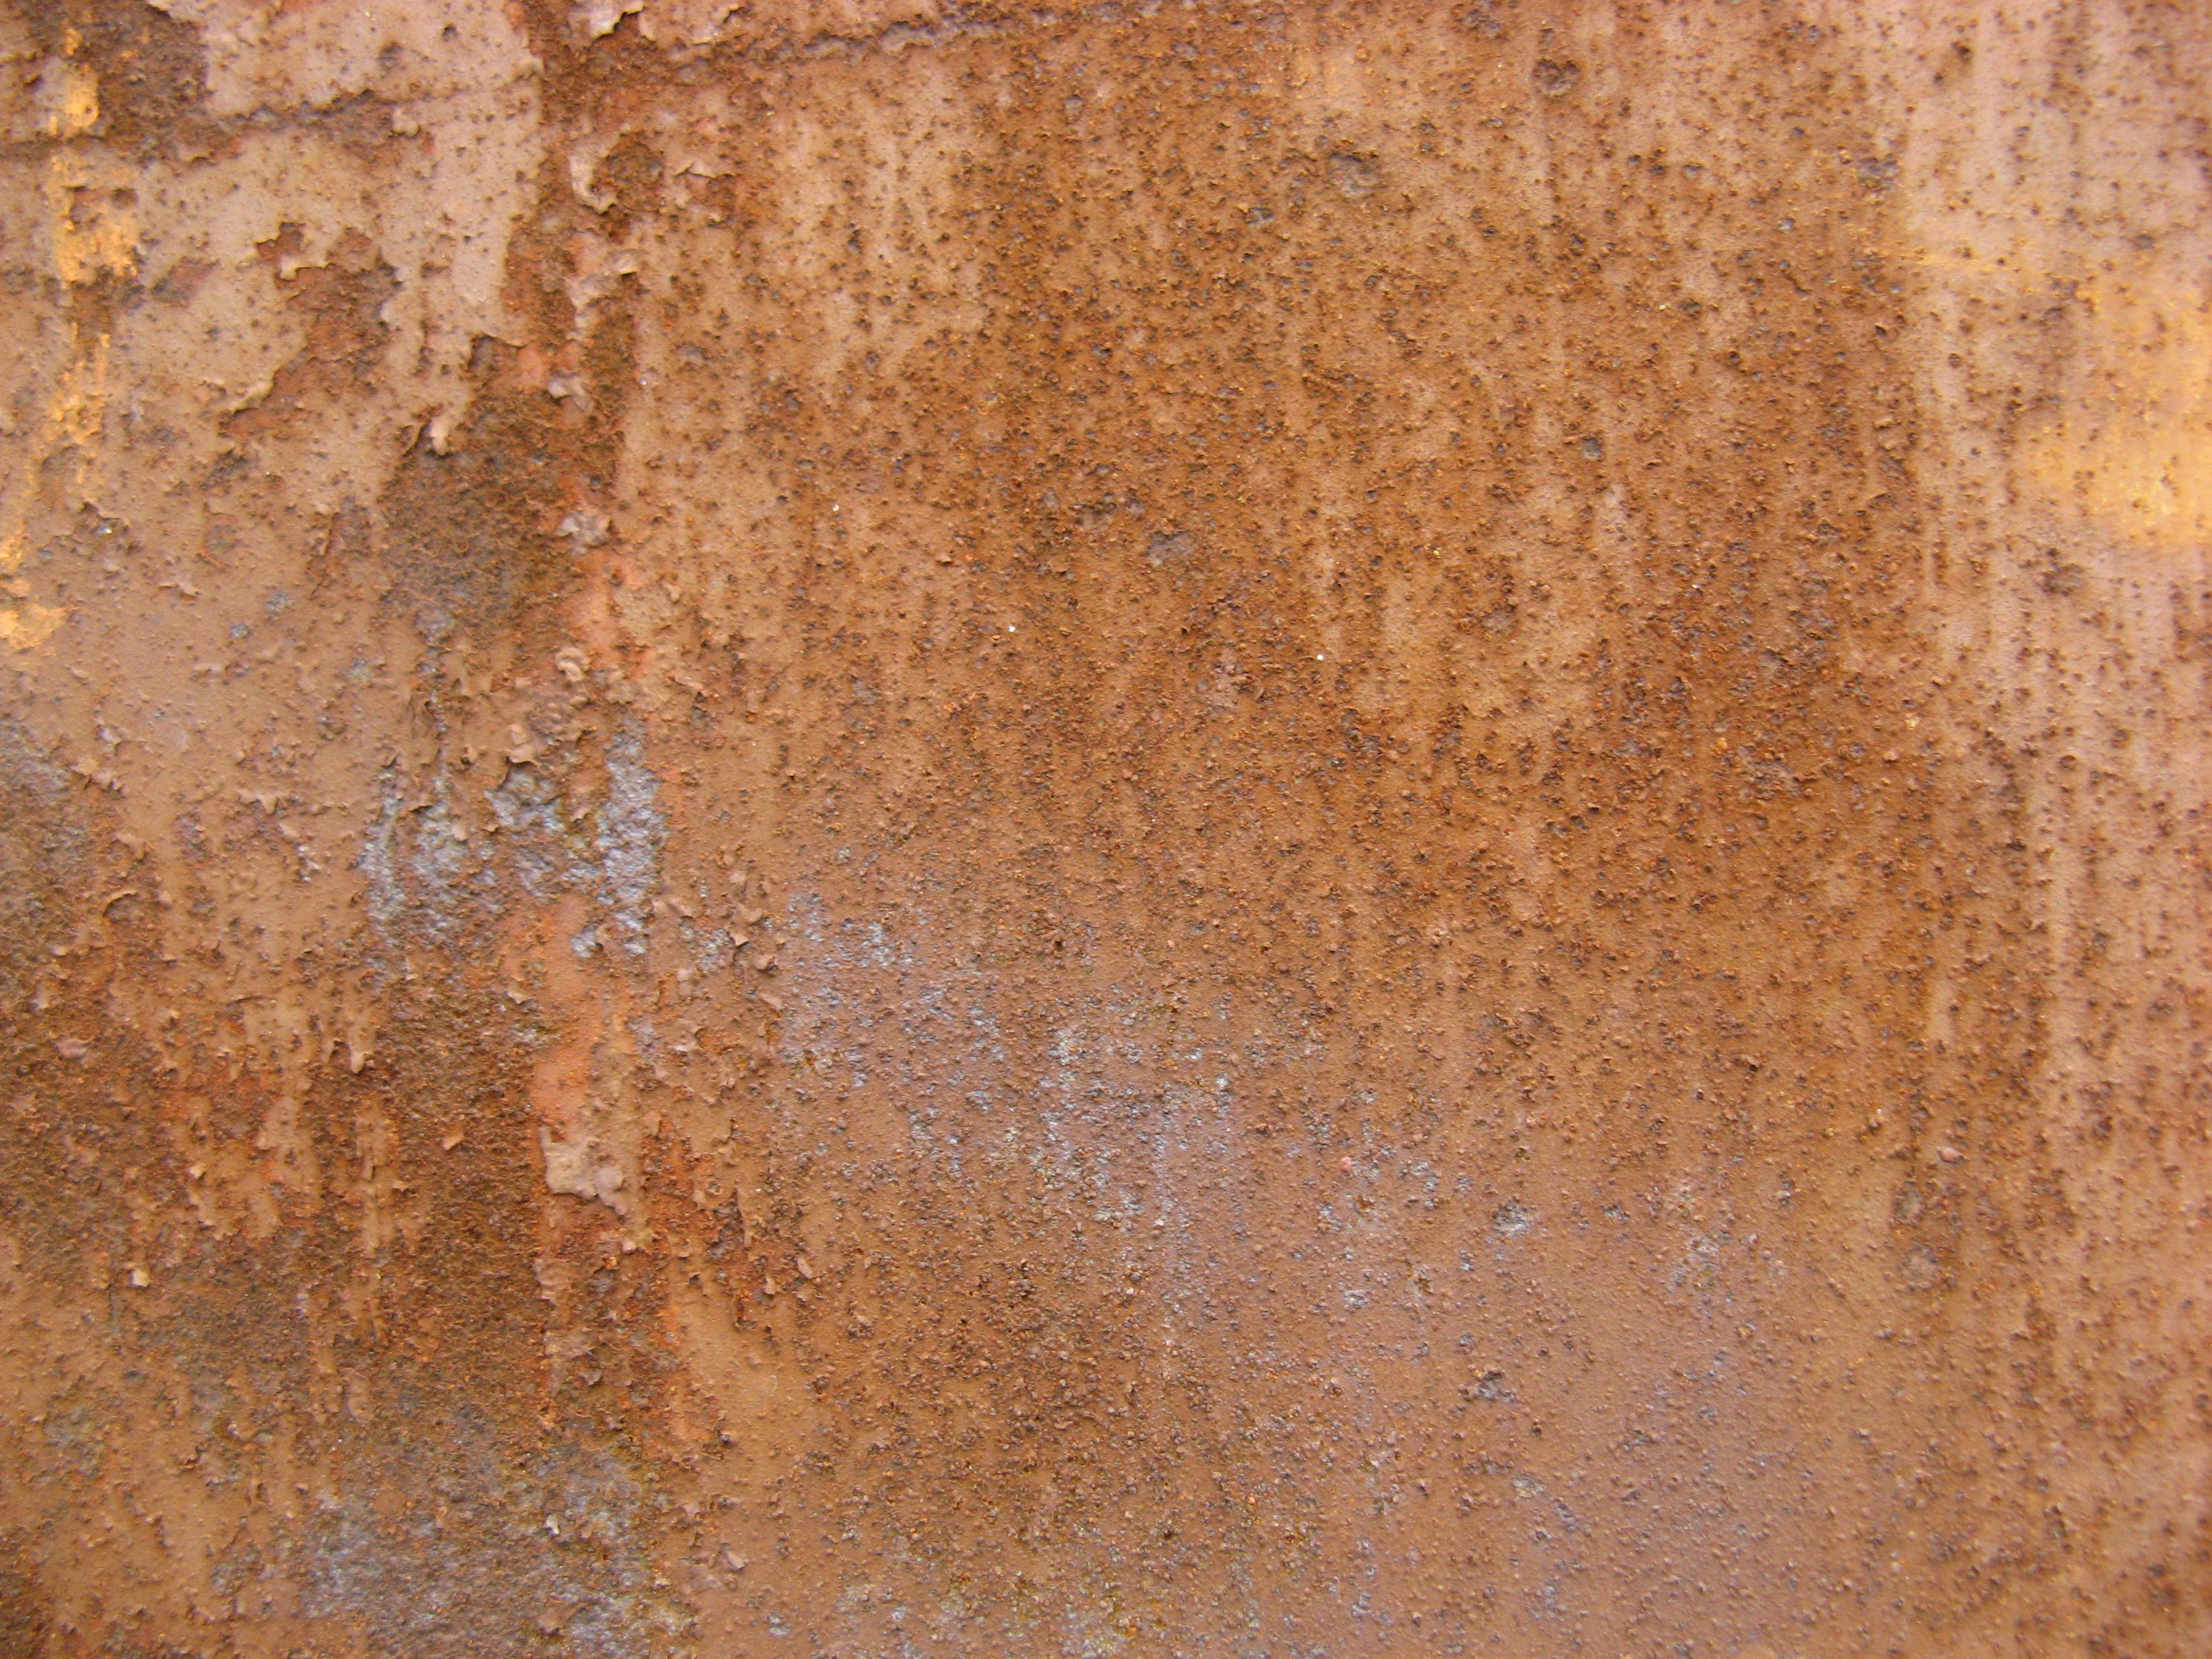 Metal corrosion photo